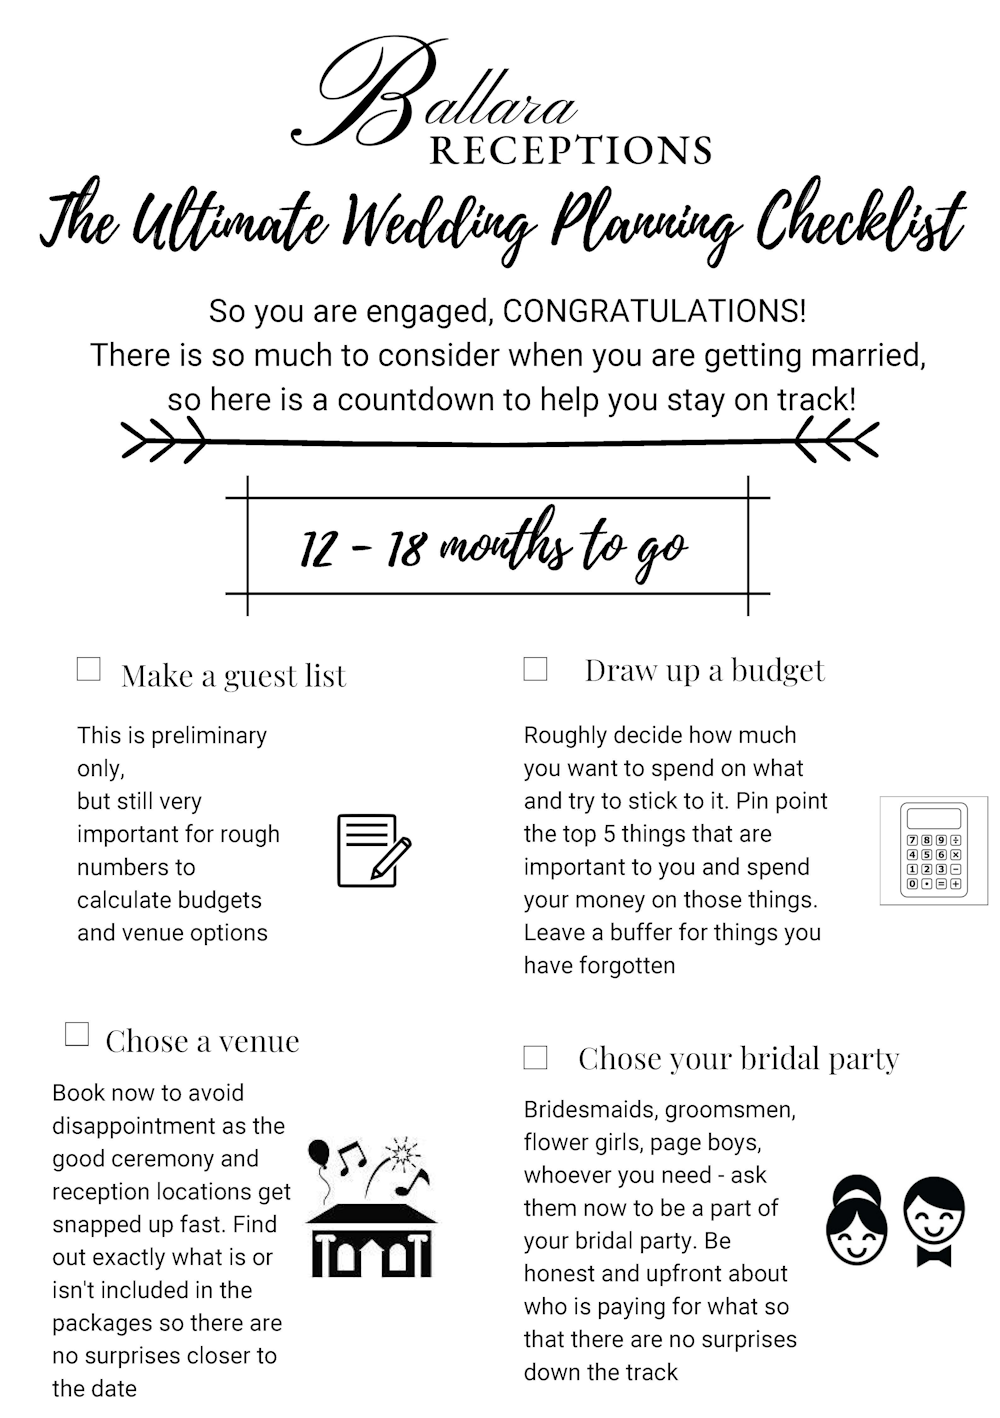 the-ultimate-wedding-planning-checklist-ballara-wedding-receptions